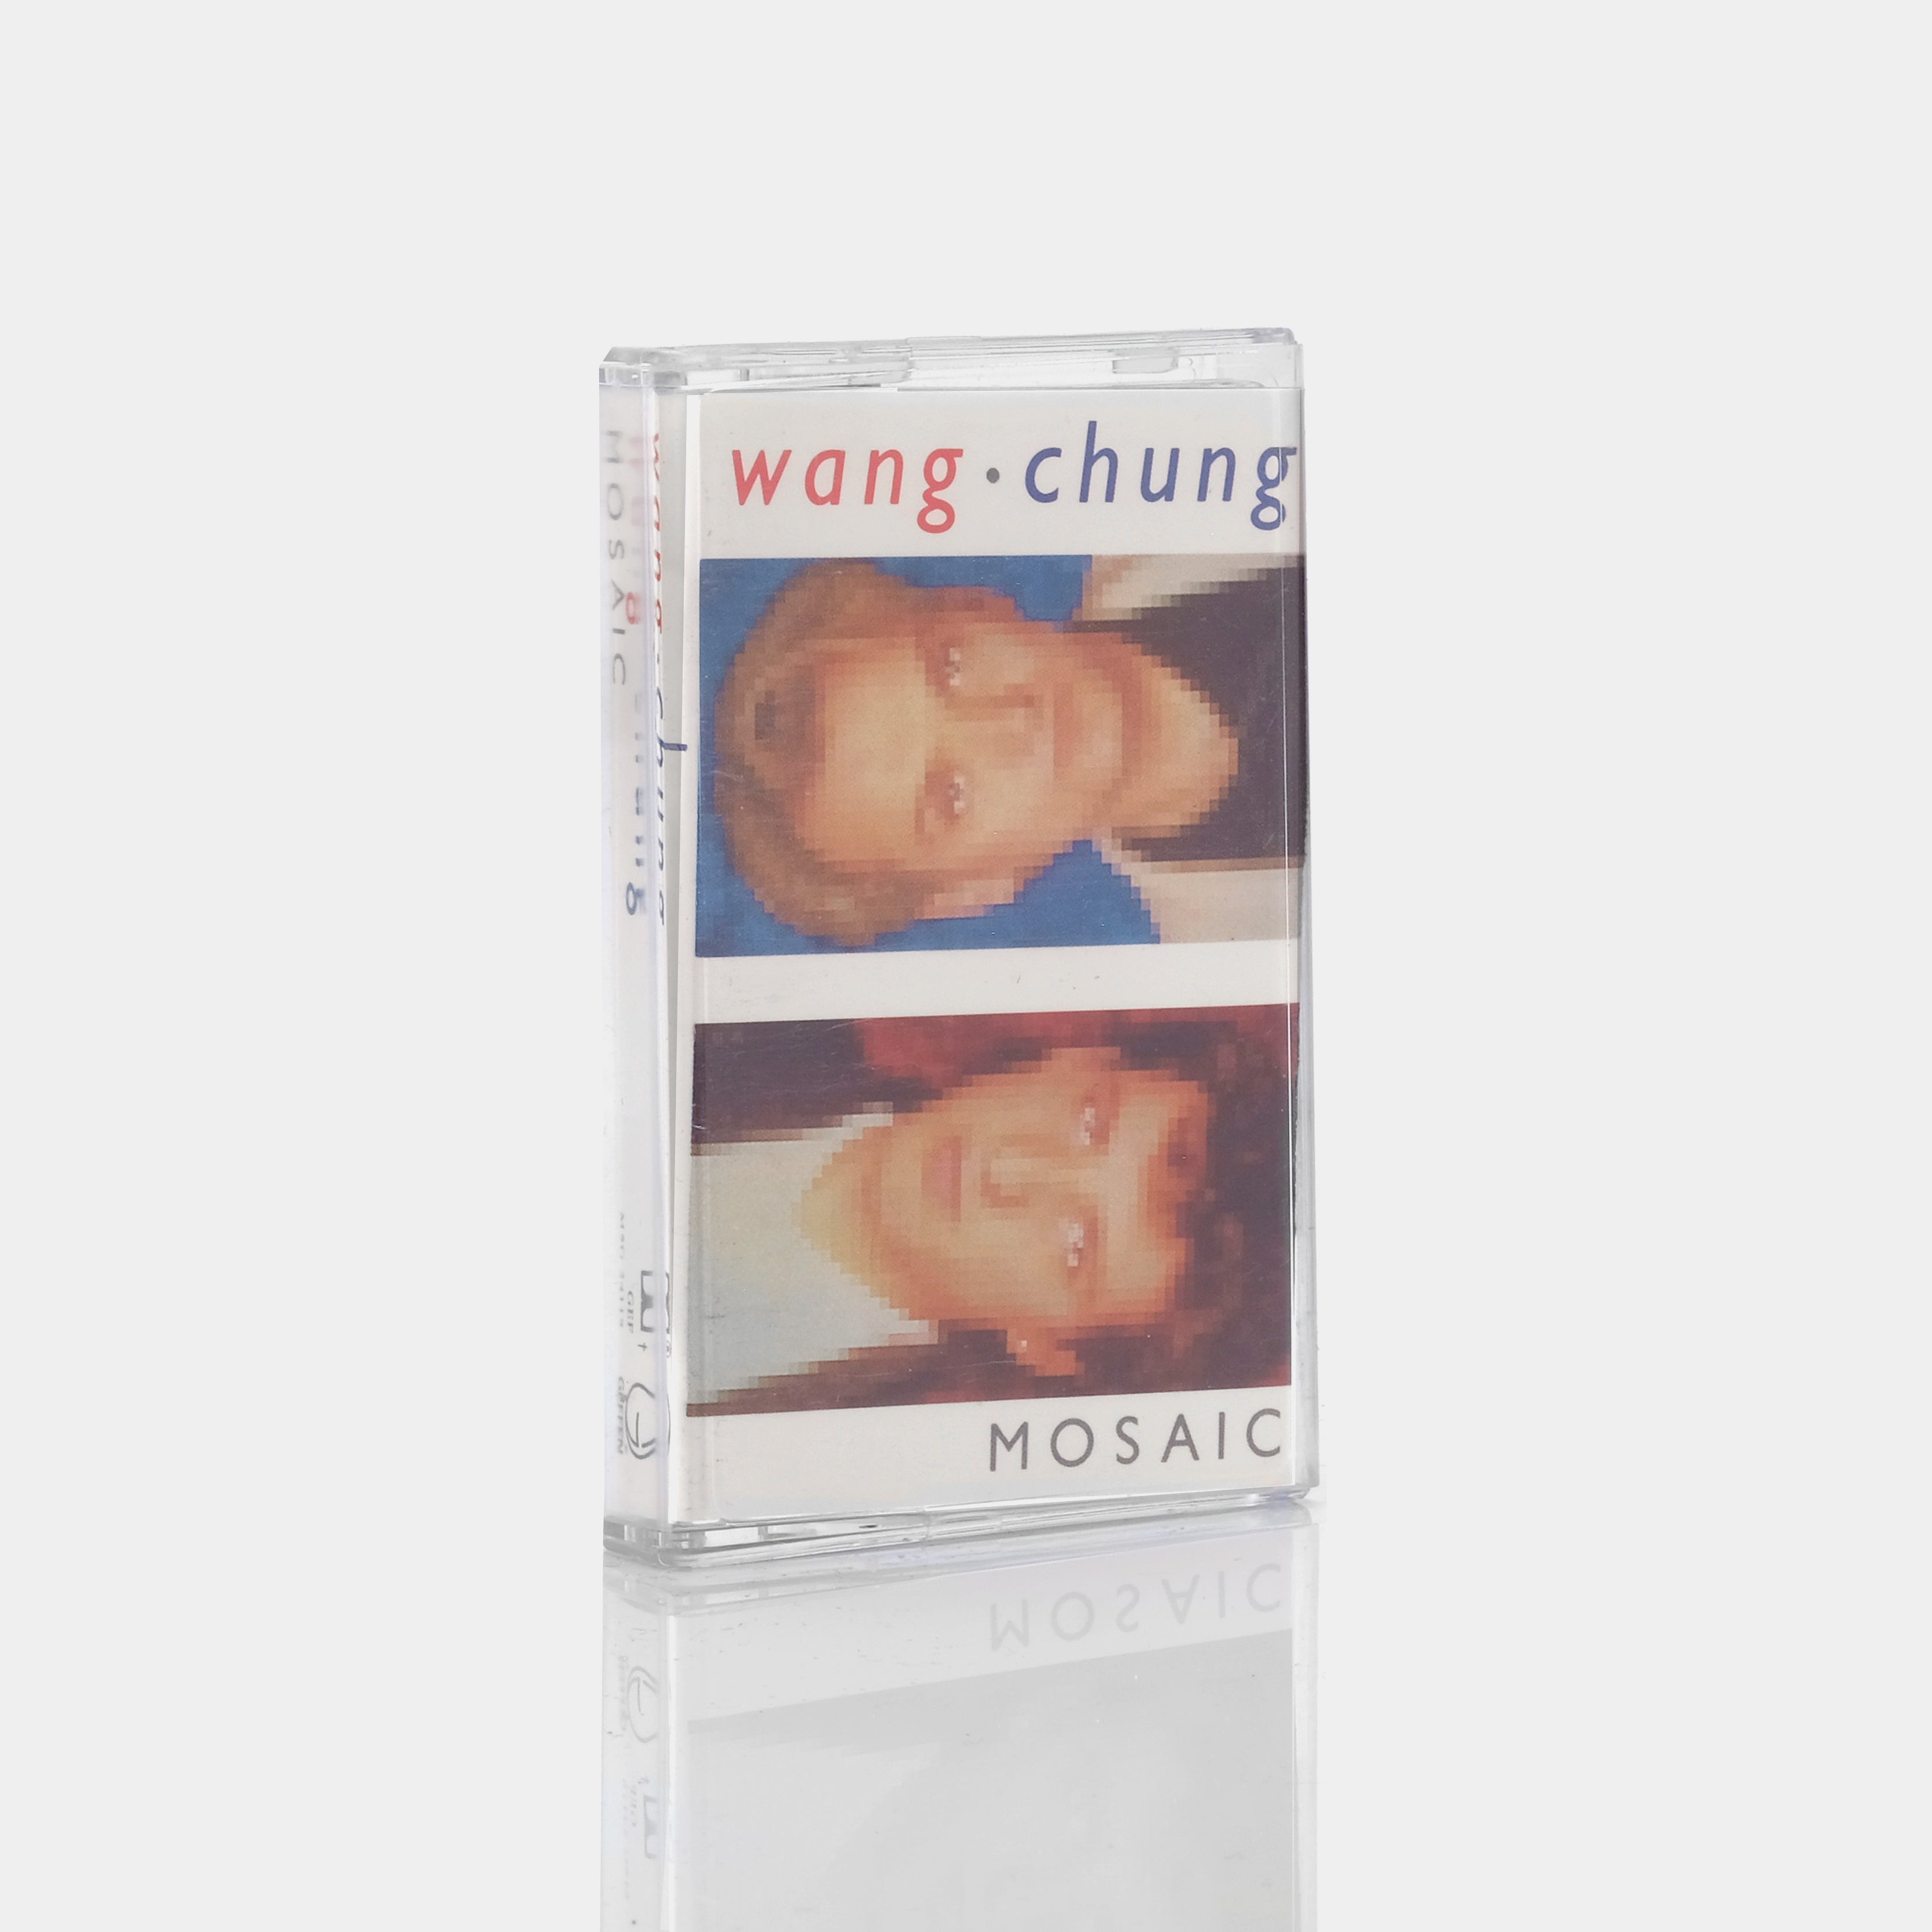 Wang Chung - Mosaic Cassette Tape